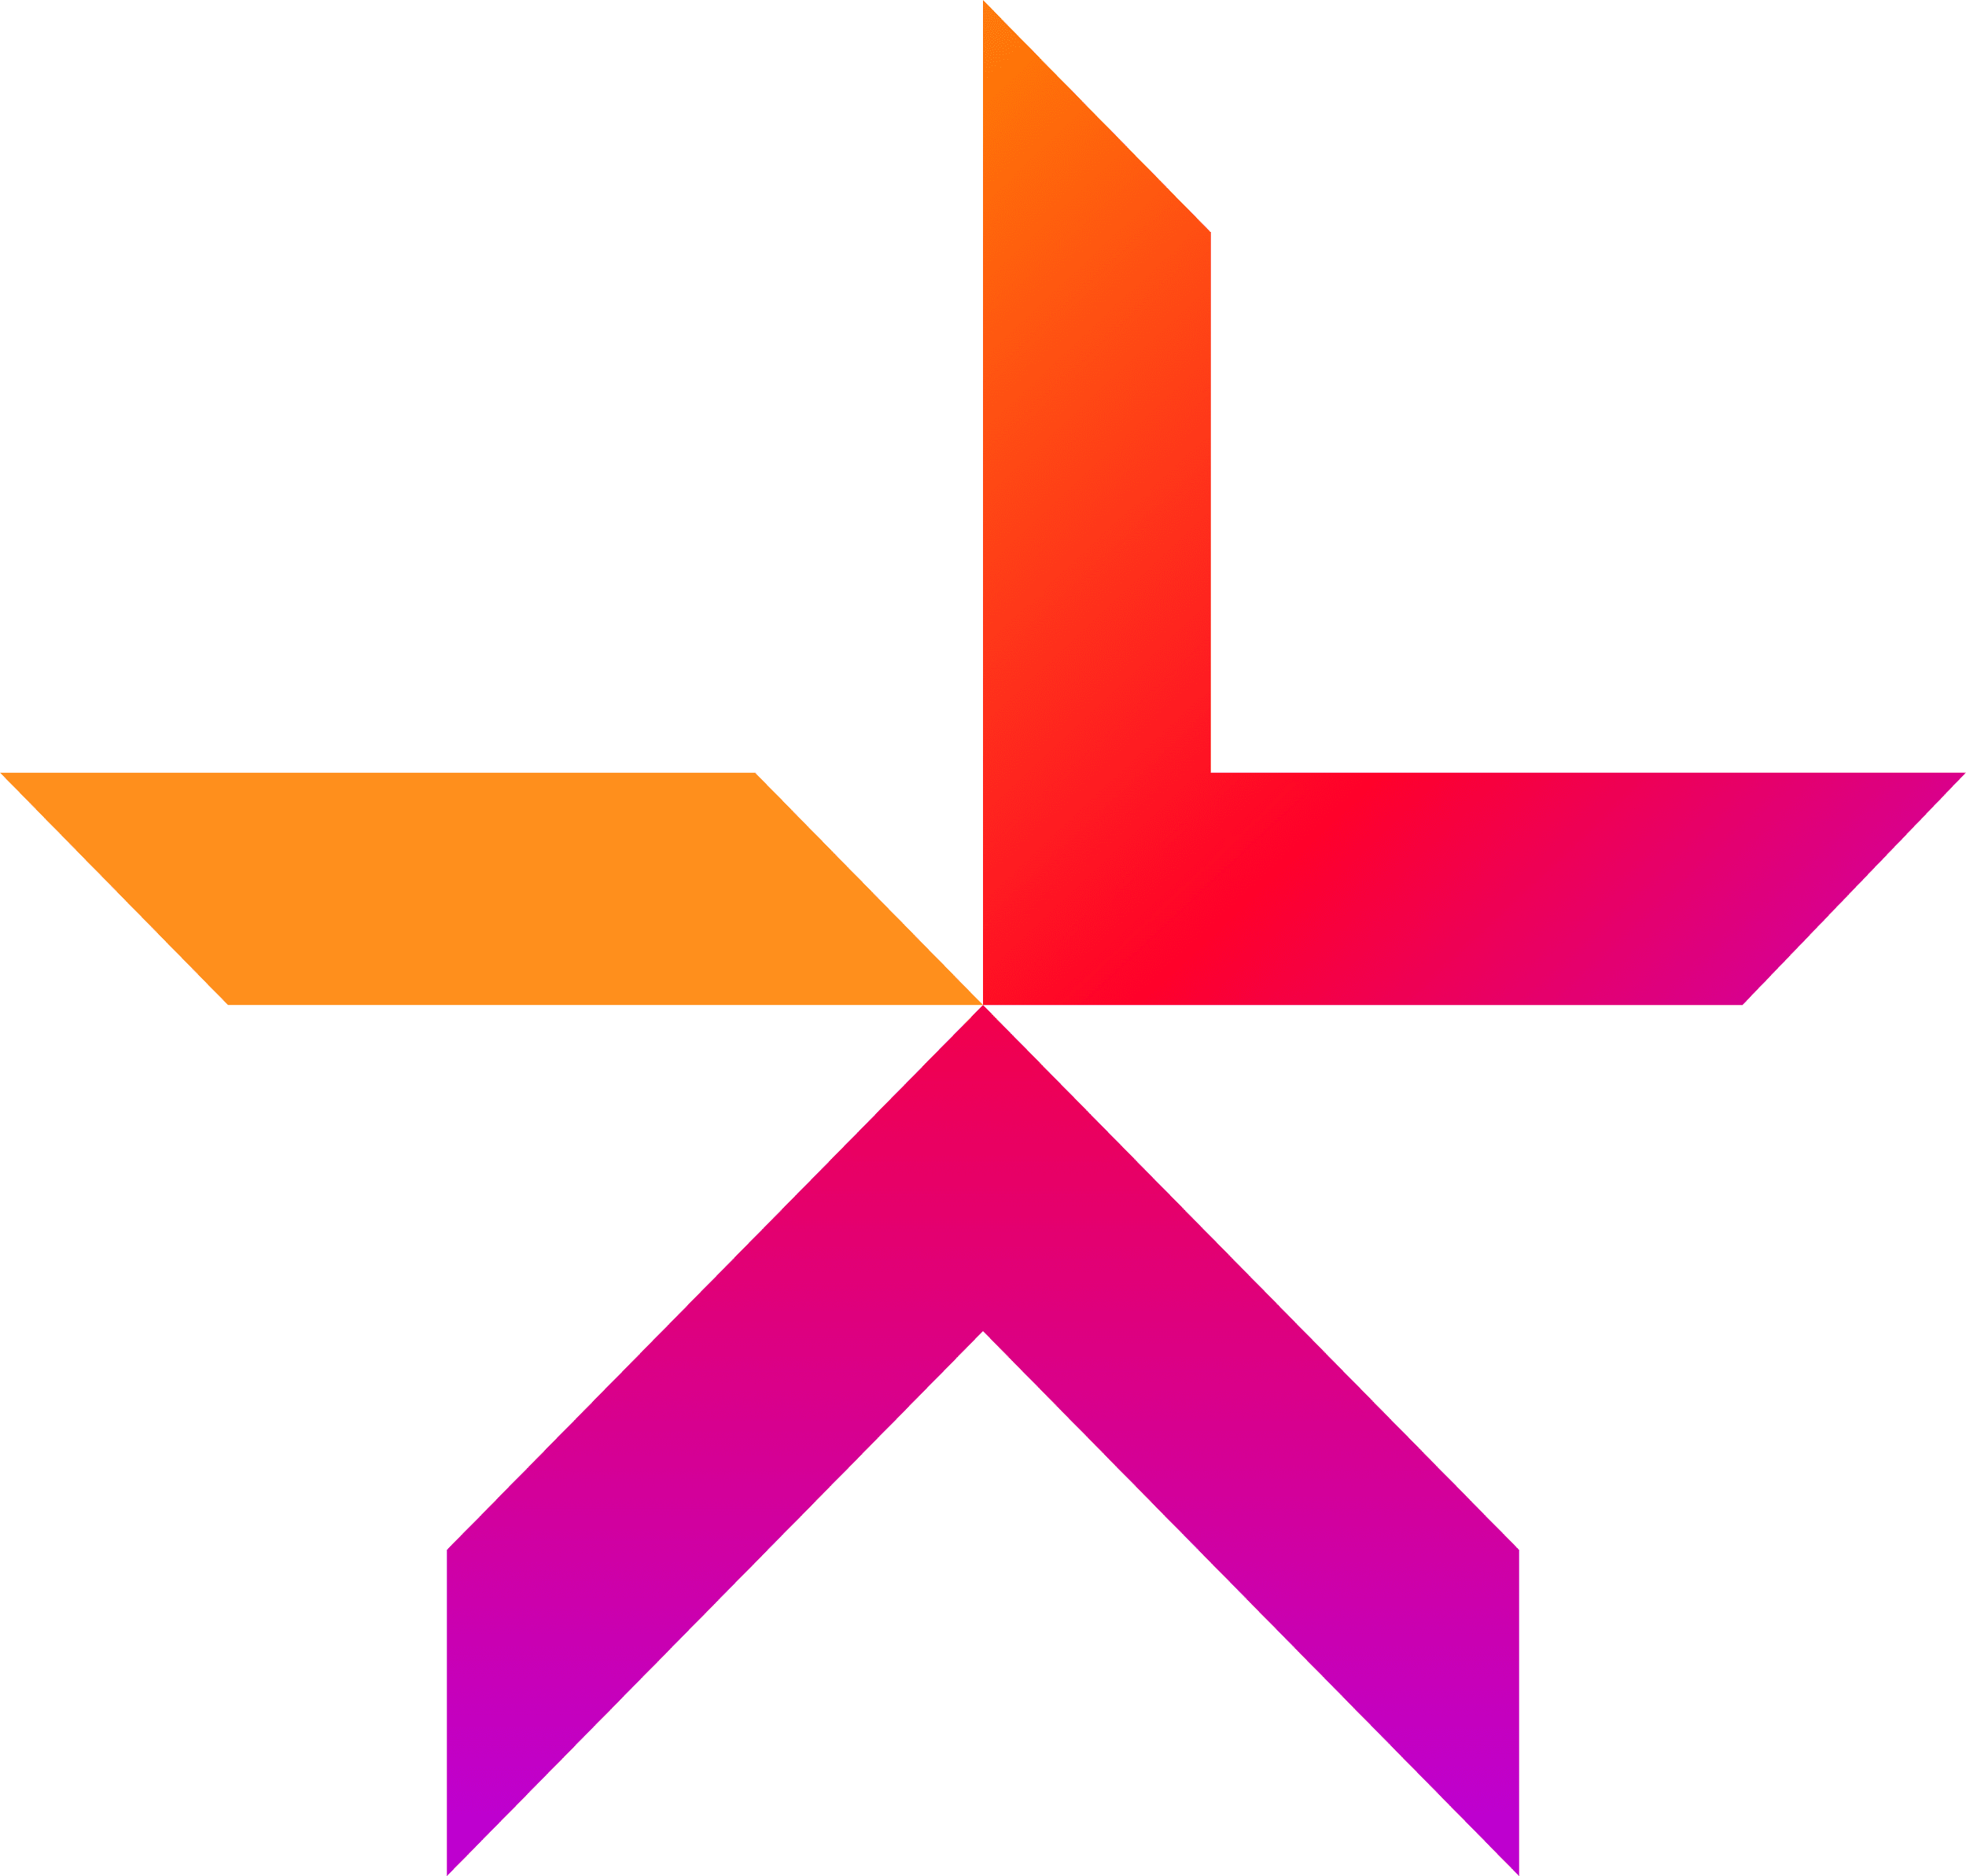 Lykke logo in svg format